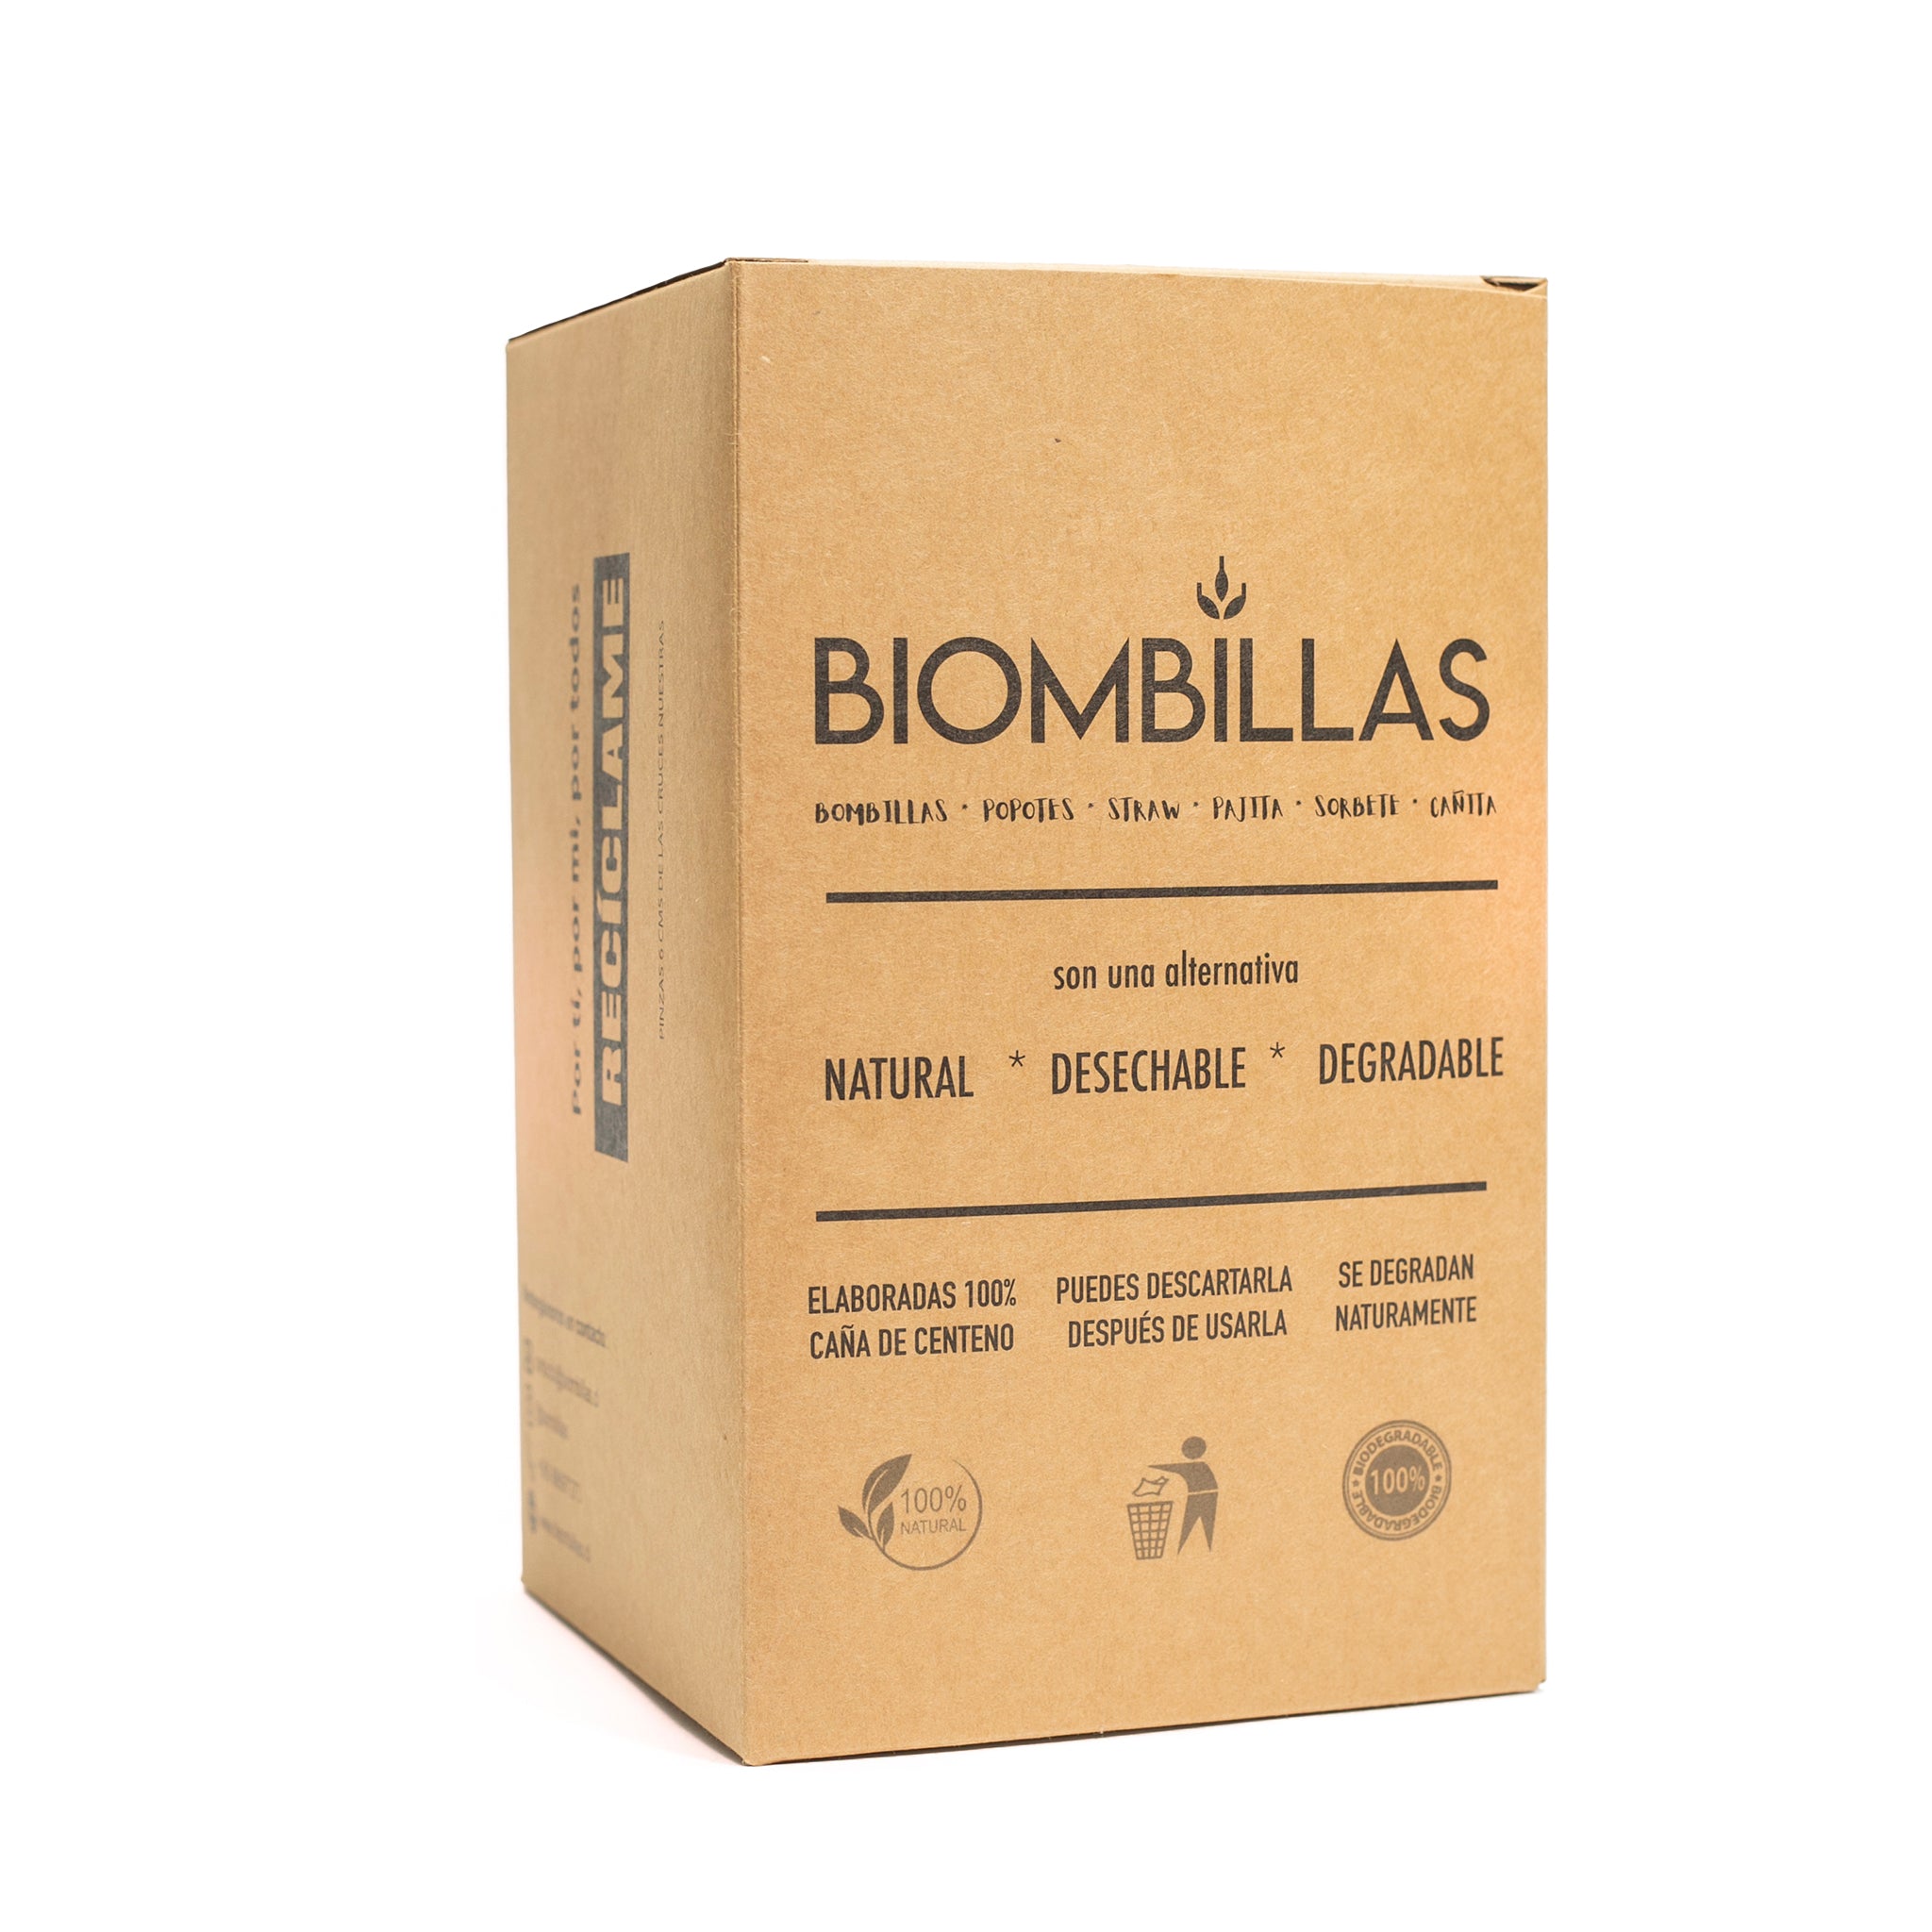 Biomstandard - biombillascl